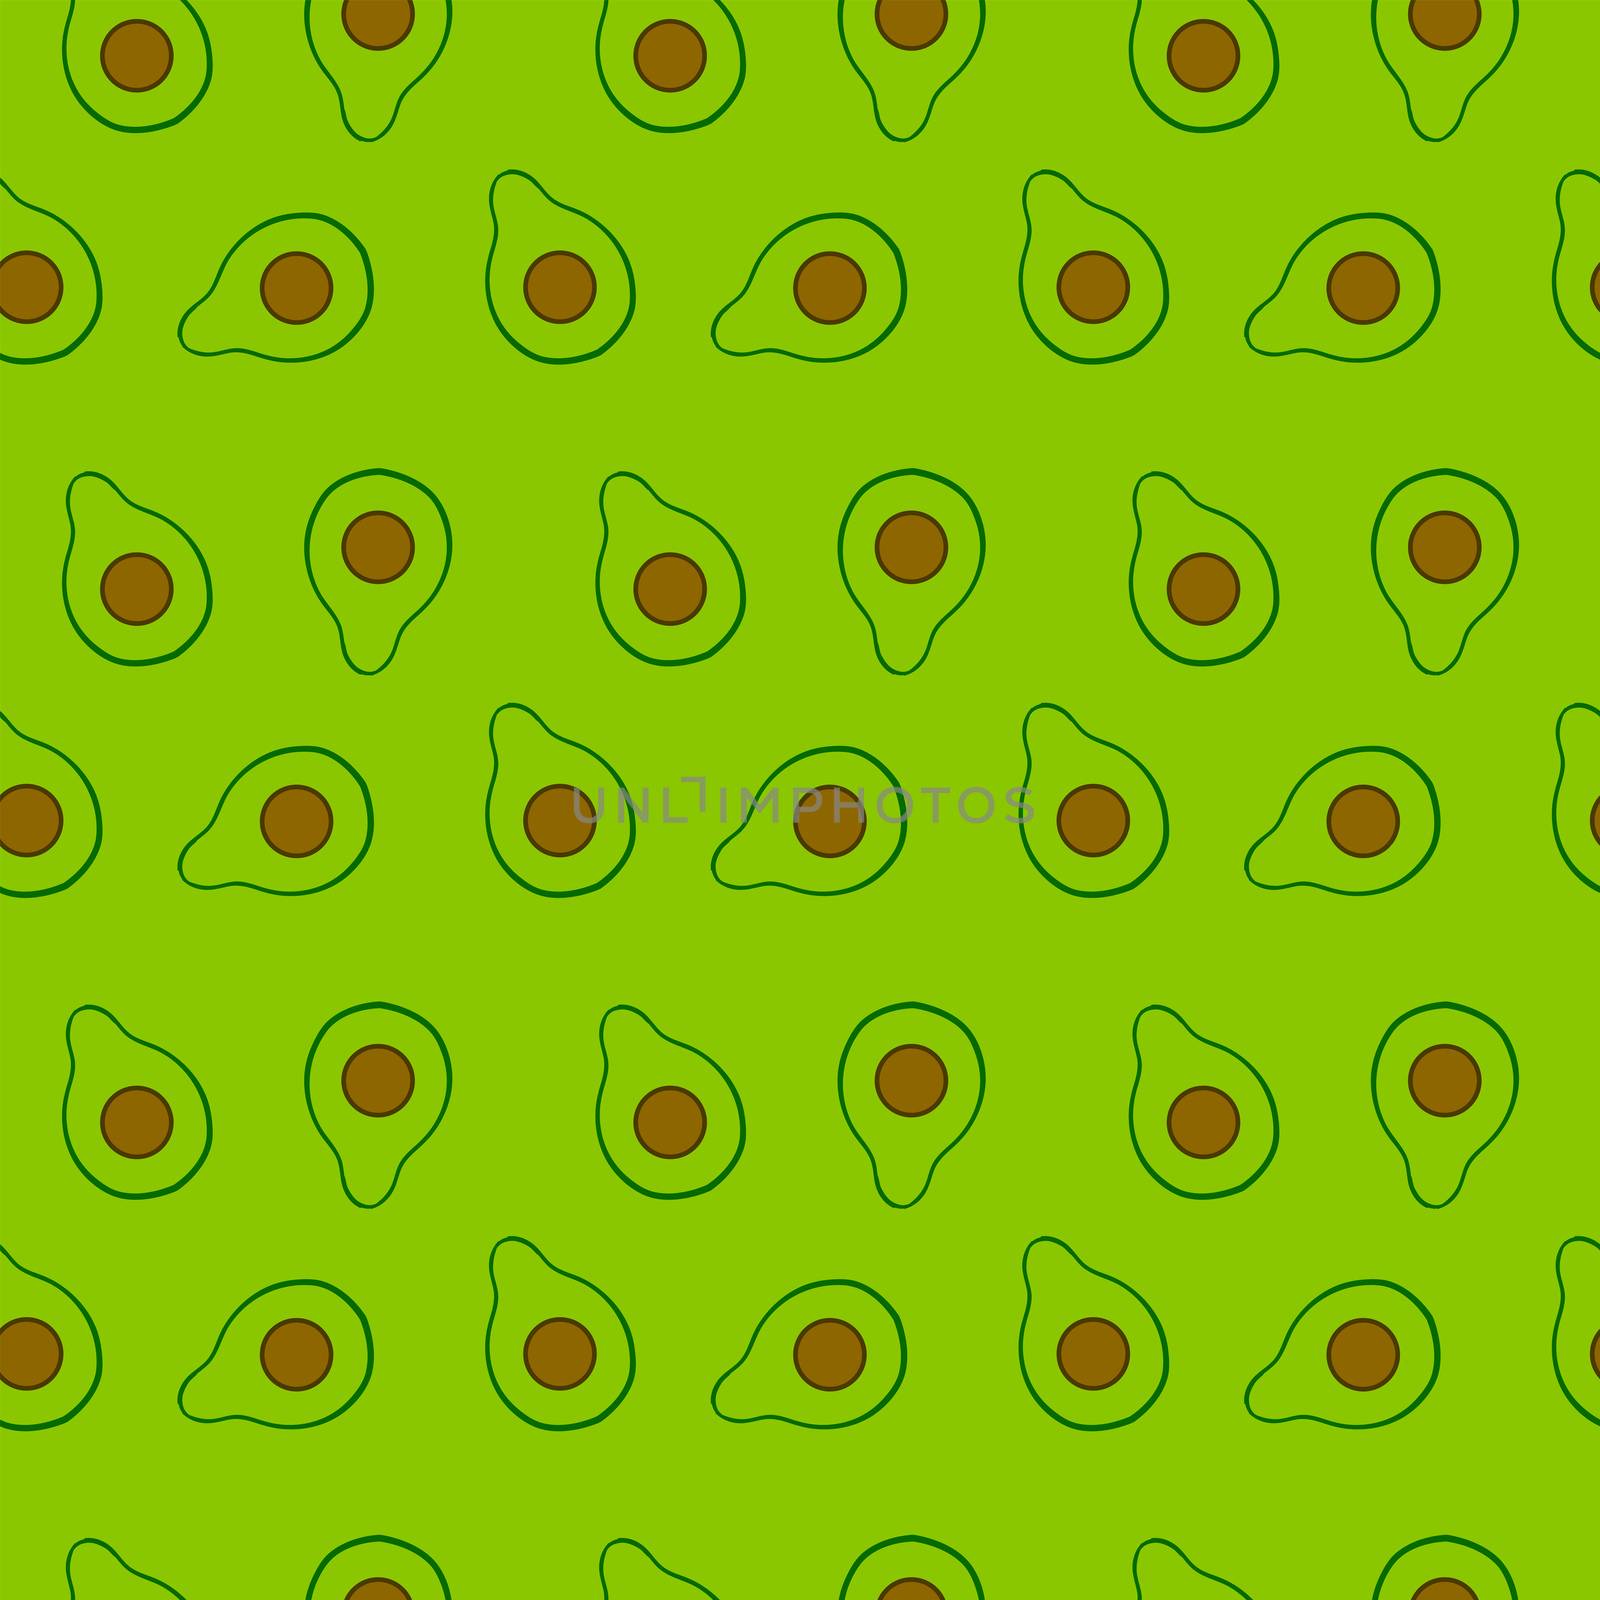 Avocado pattern , illustration, vector on white background by Morphart